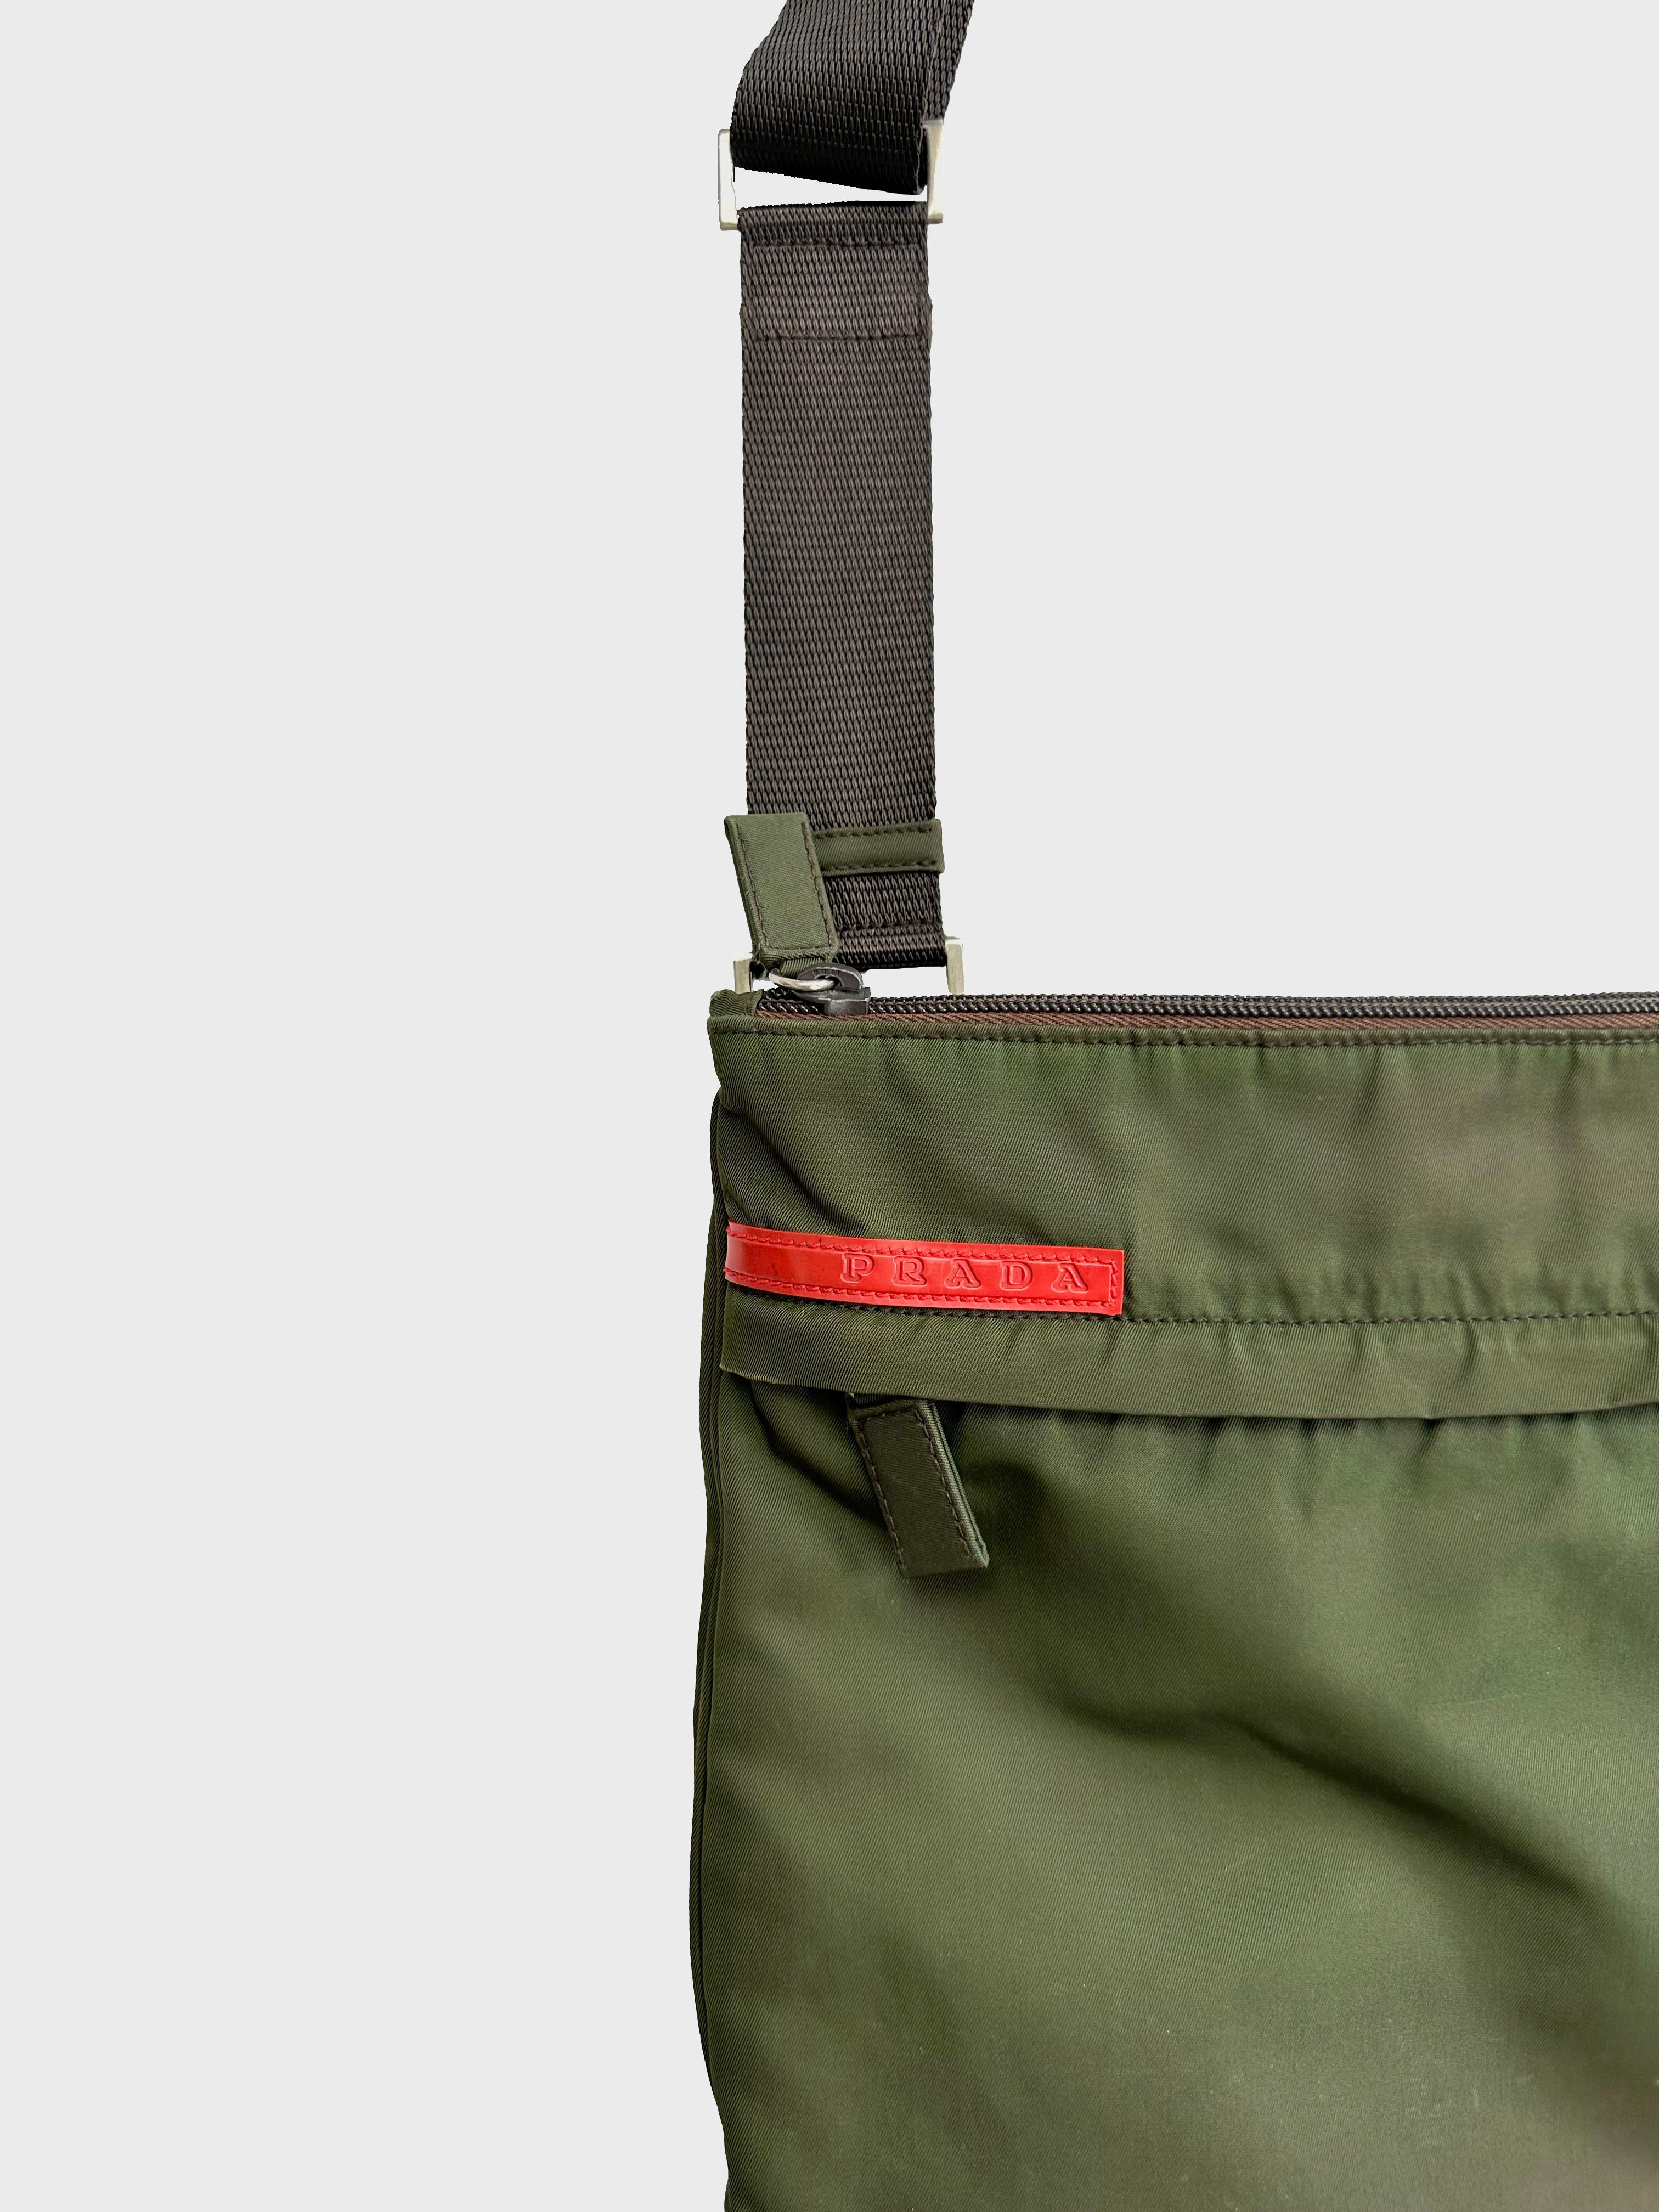 Prada Sport Green Side Bag 00's